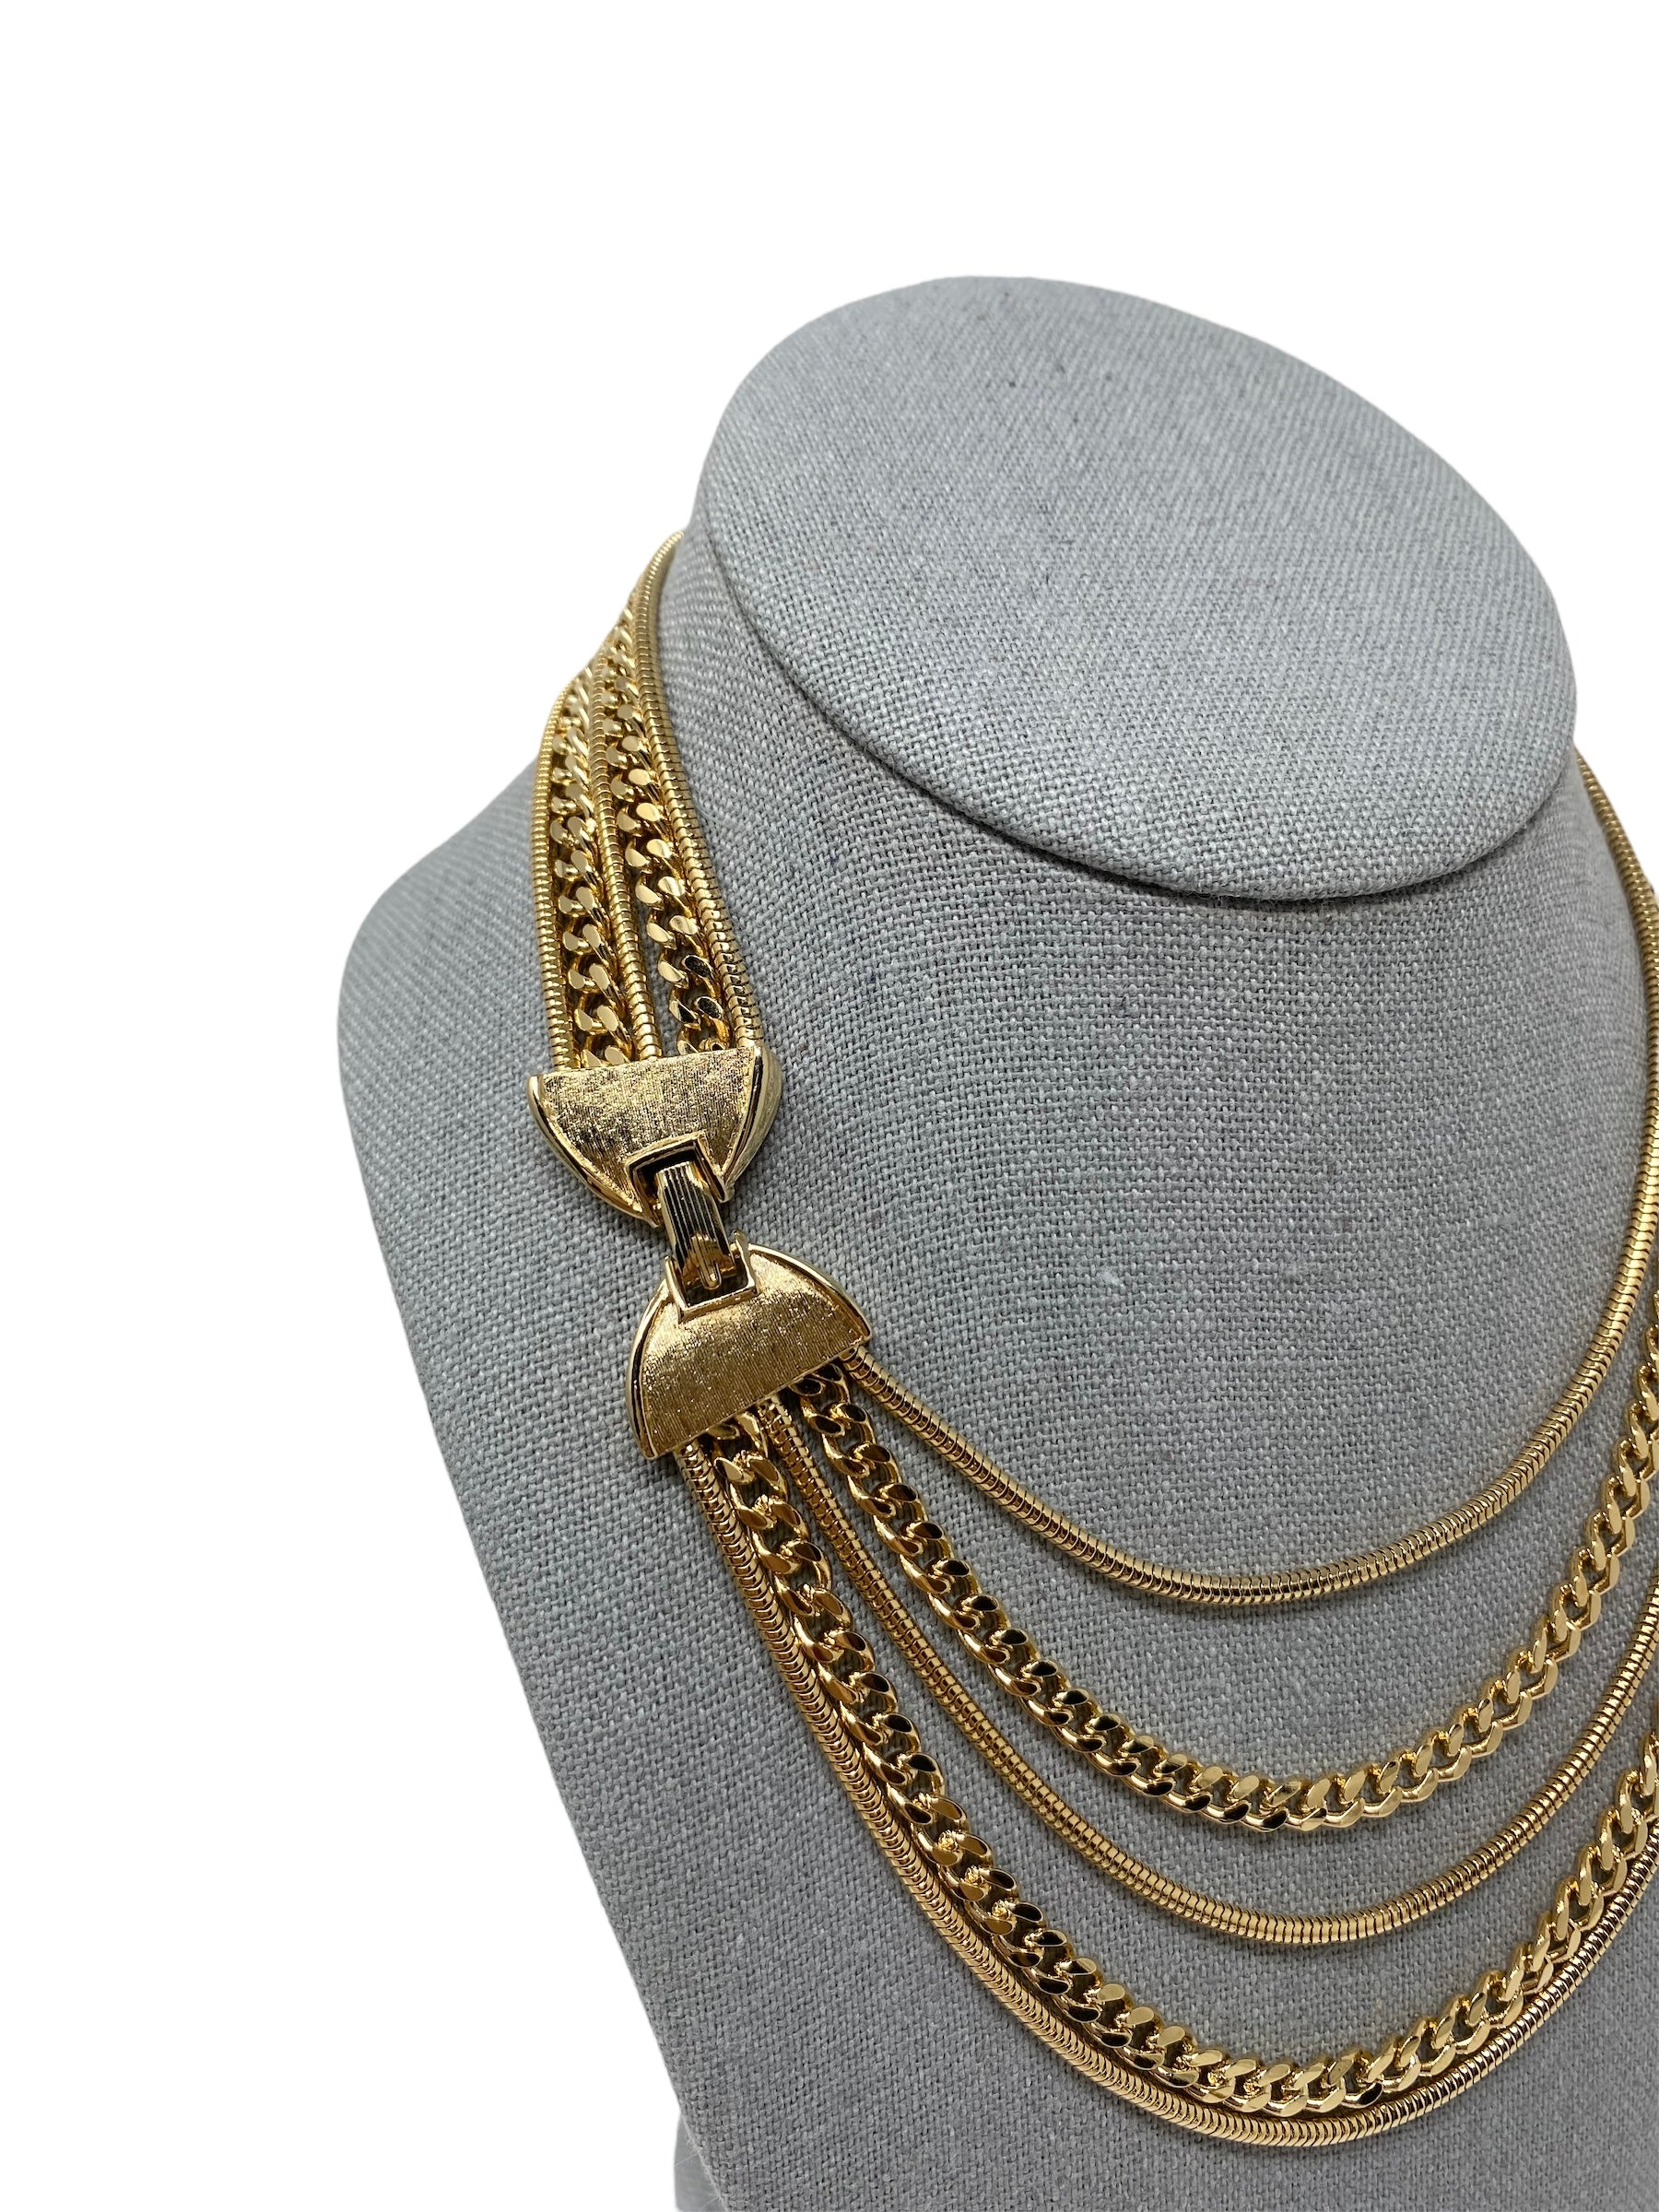 Vintage Gold Toned Multi Strand Necklace 